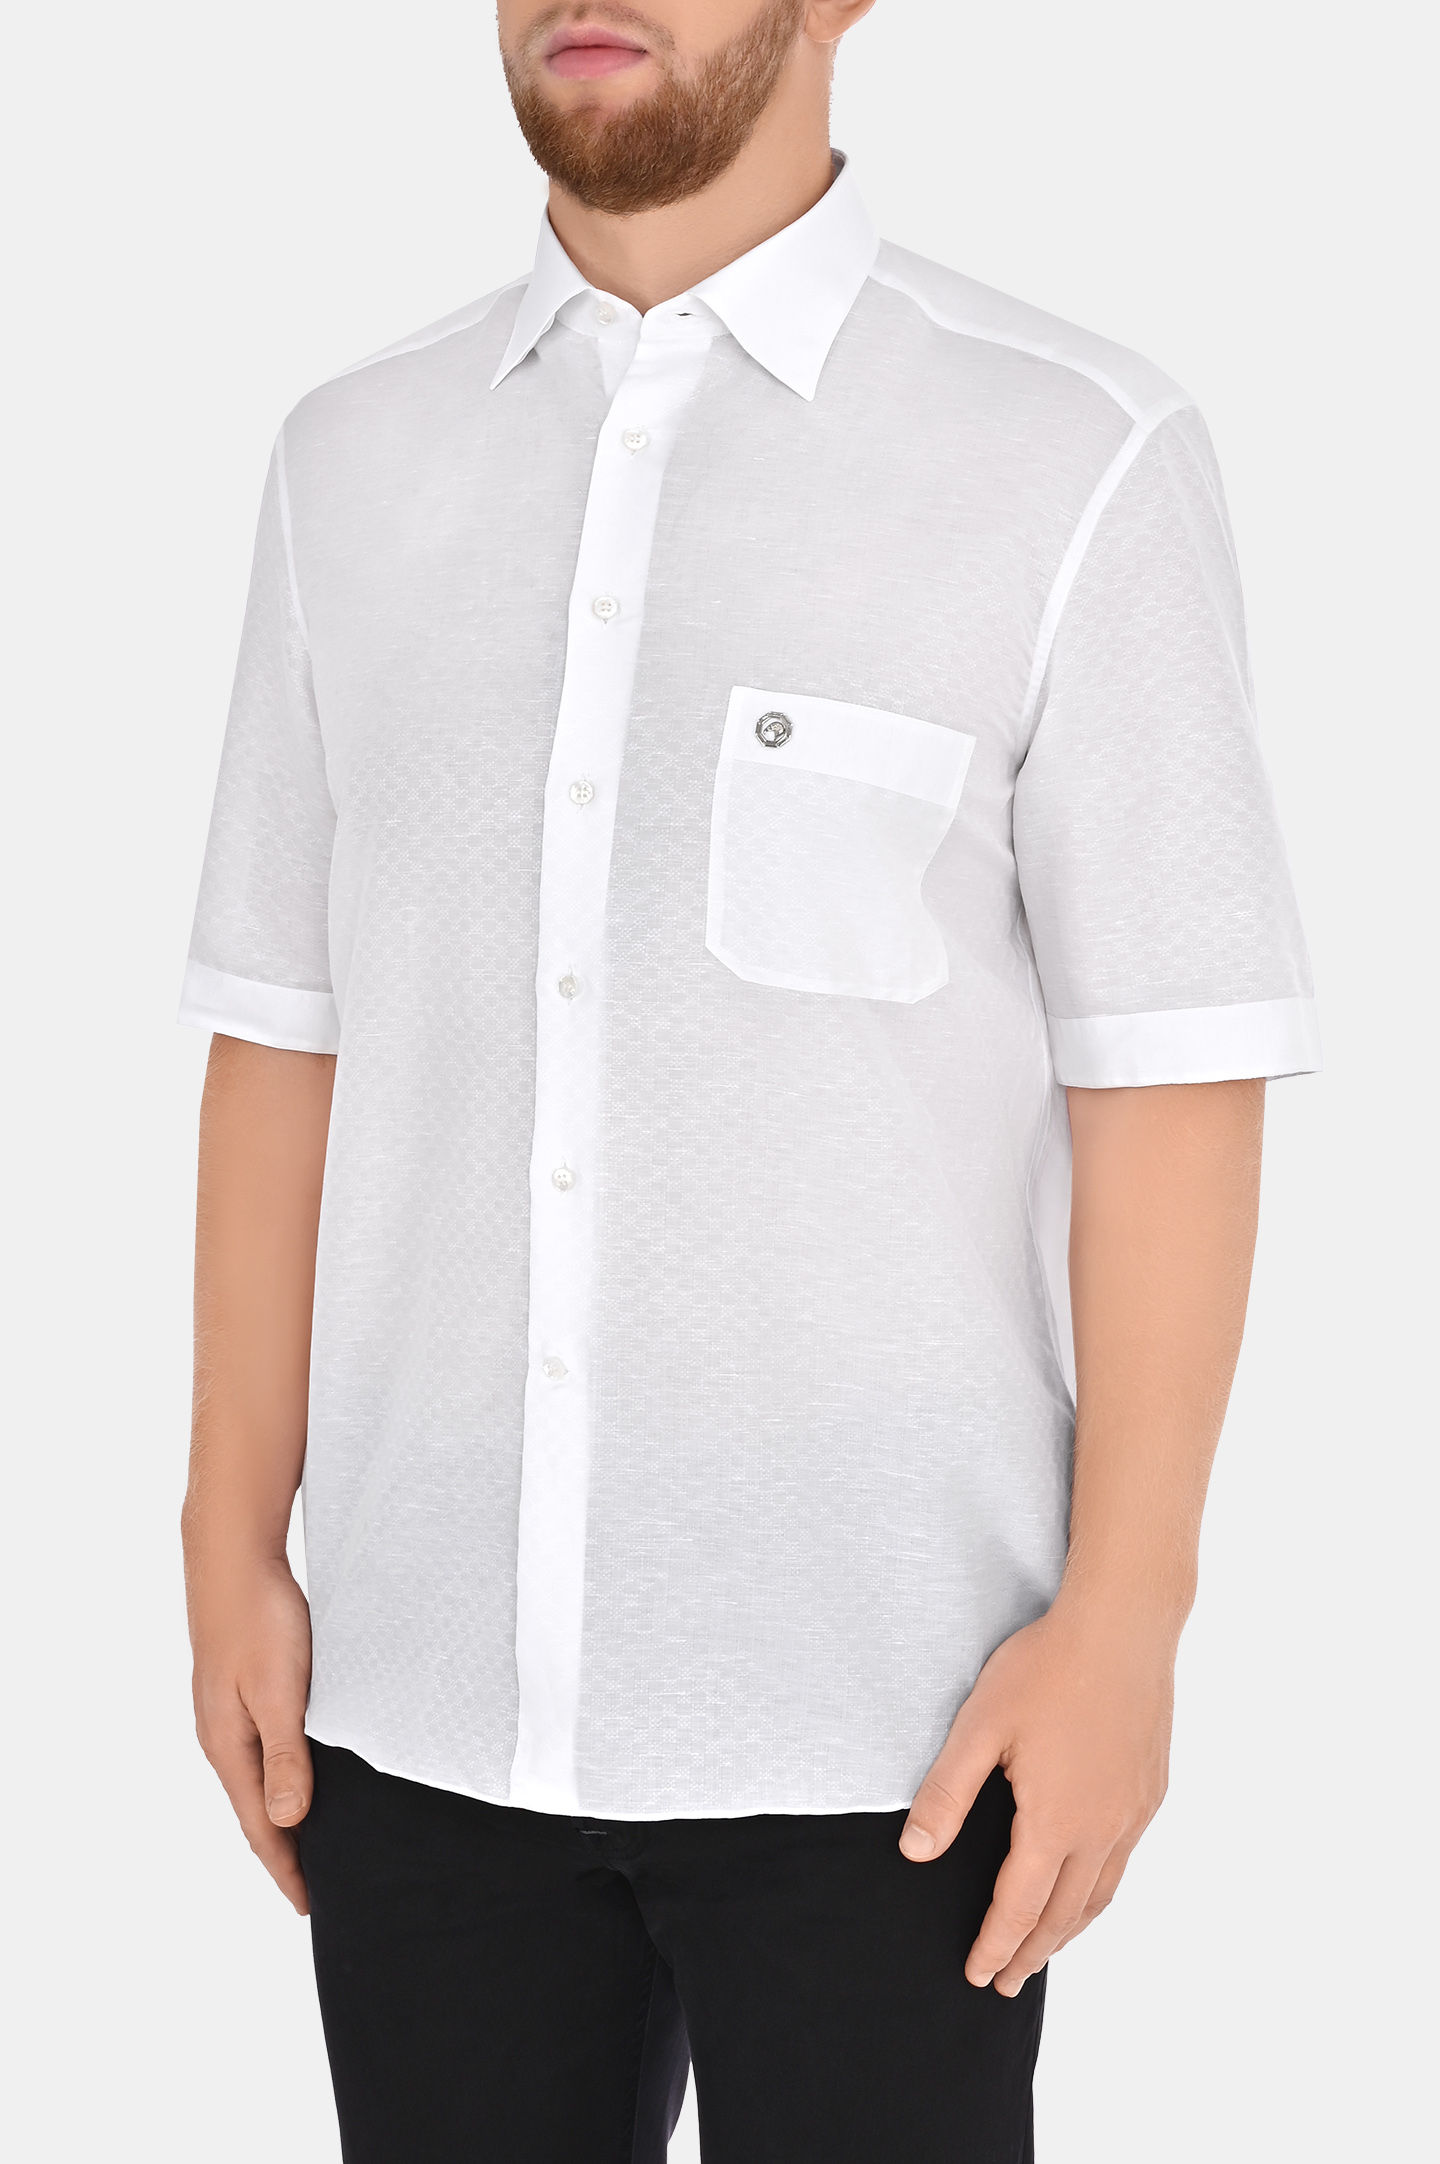 Рубашка STEFANO RICCI MC006721 R2558, цвет: Белый, Мужской